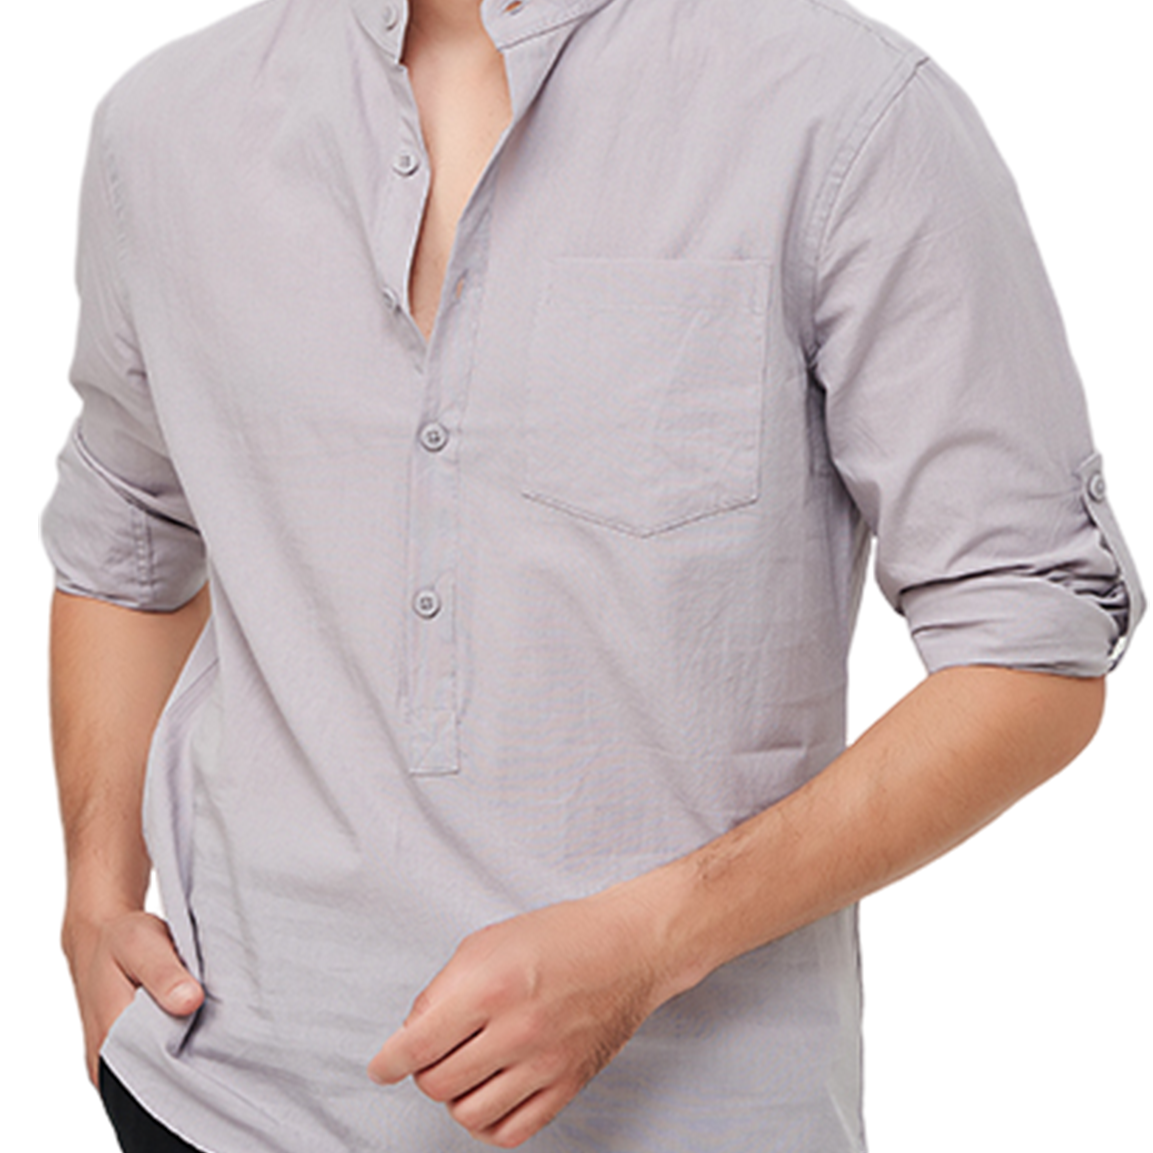 Men's Casual Solid Color Henley Collar Cotton Pocket Long Sleeve Shirt